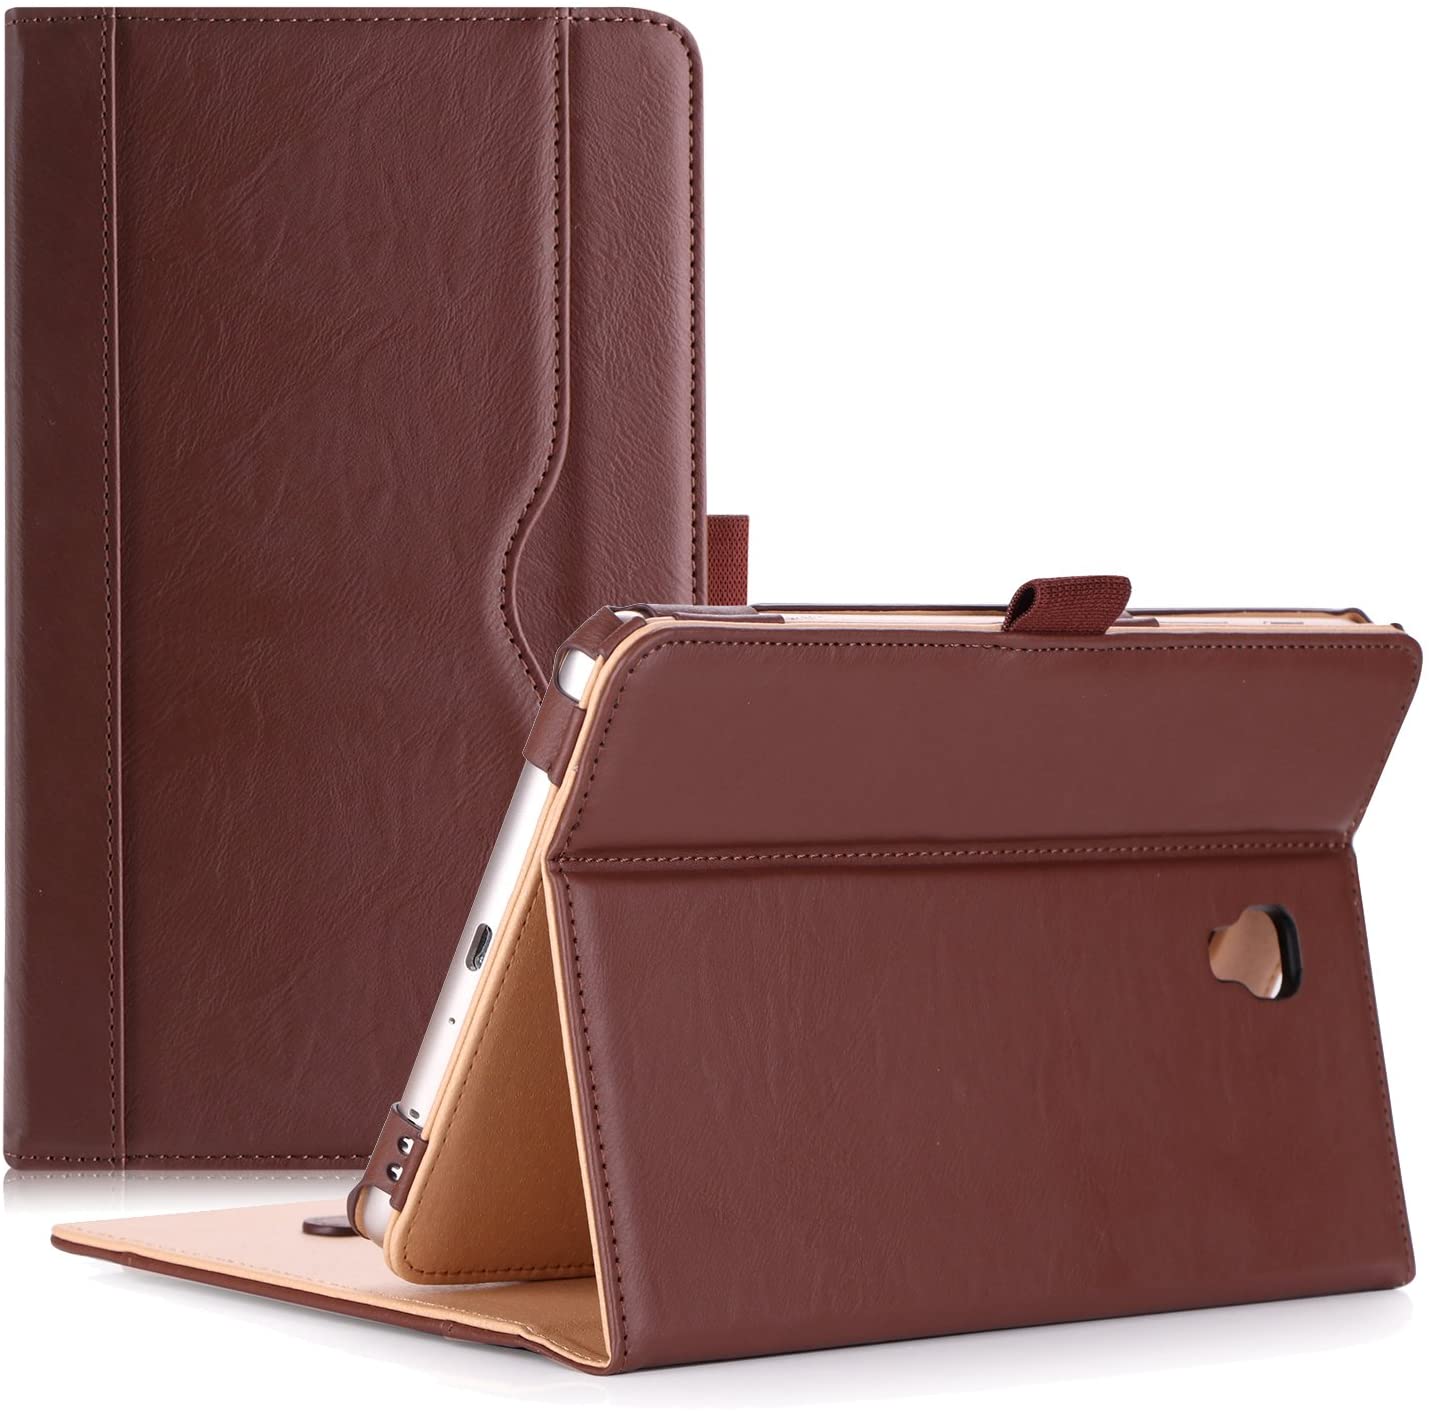 Galaxy Tab A 8.0 2017 T380 Leather Folio Case | ProCase brown